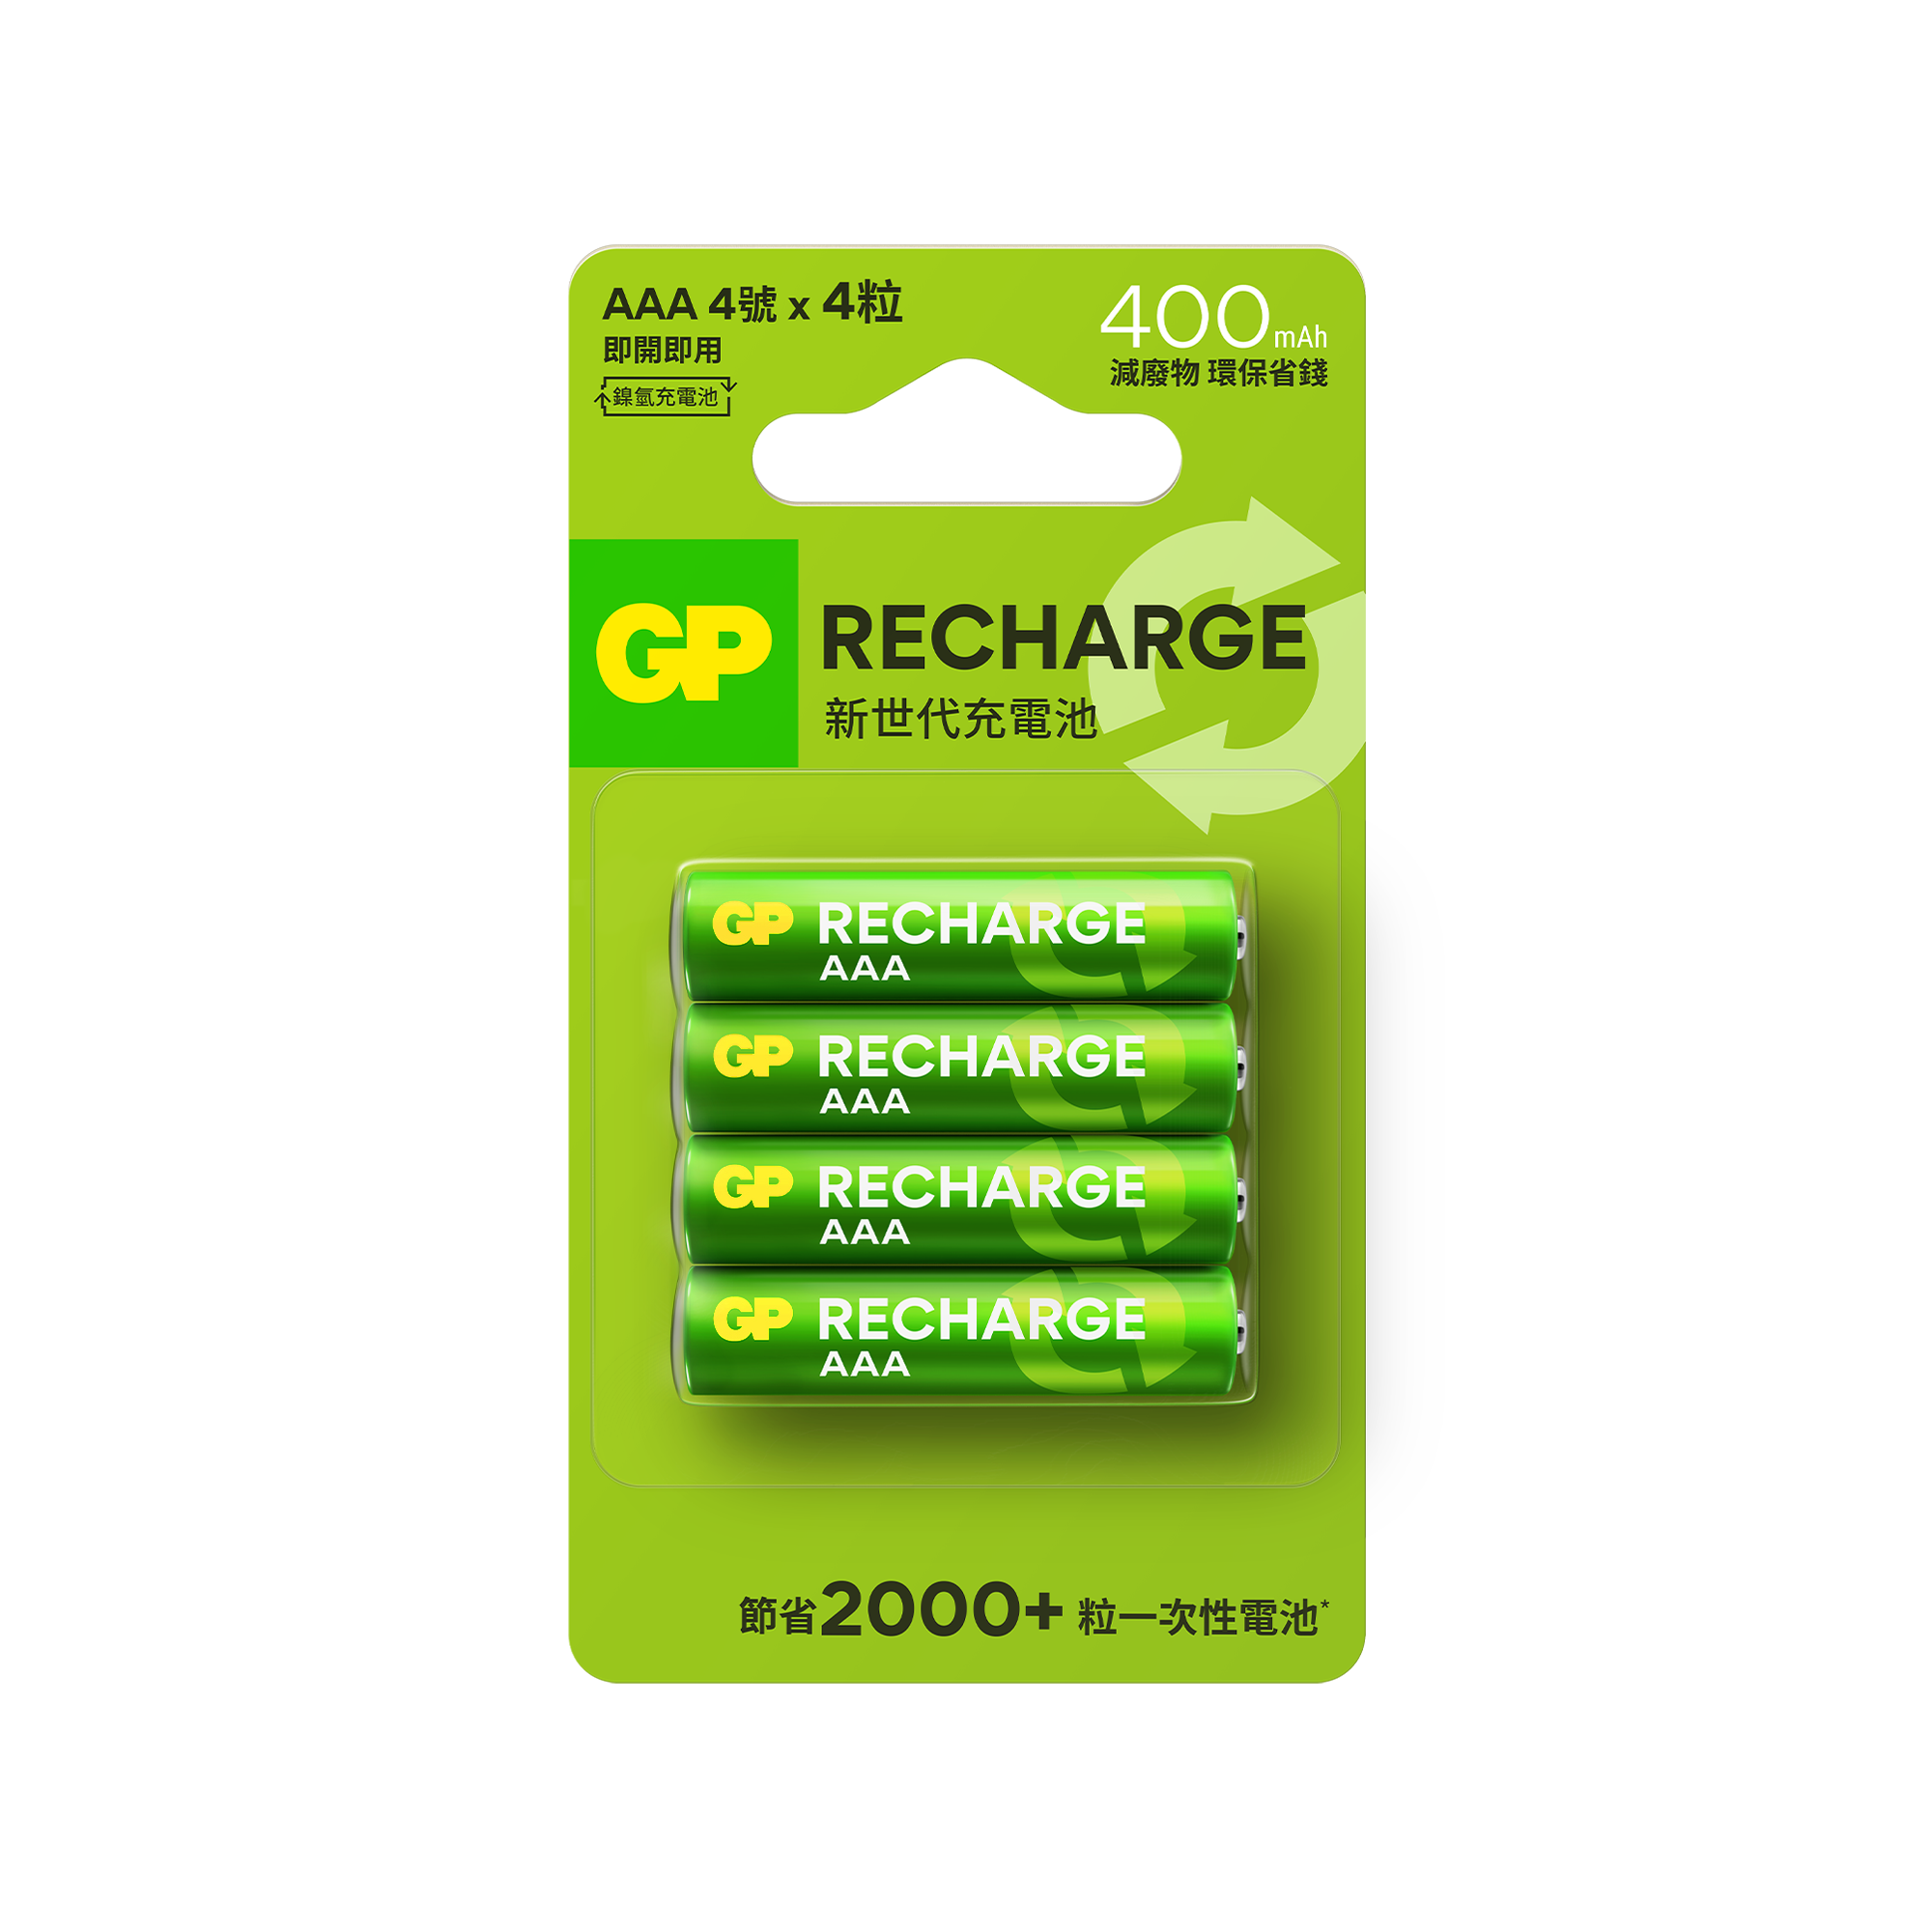 GP Recharge AAA充電池 400mAh (4粒裝)